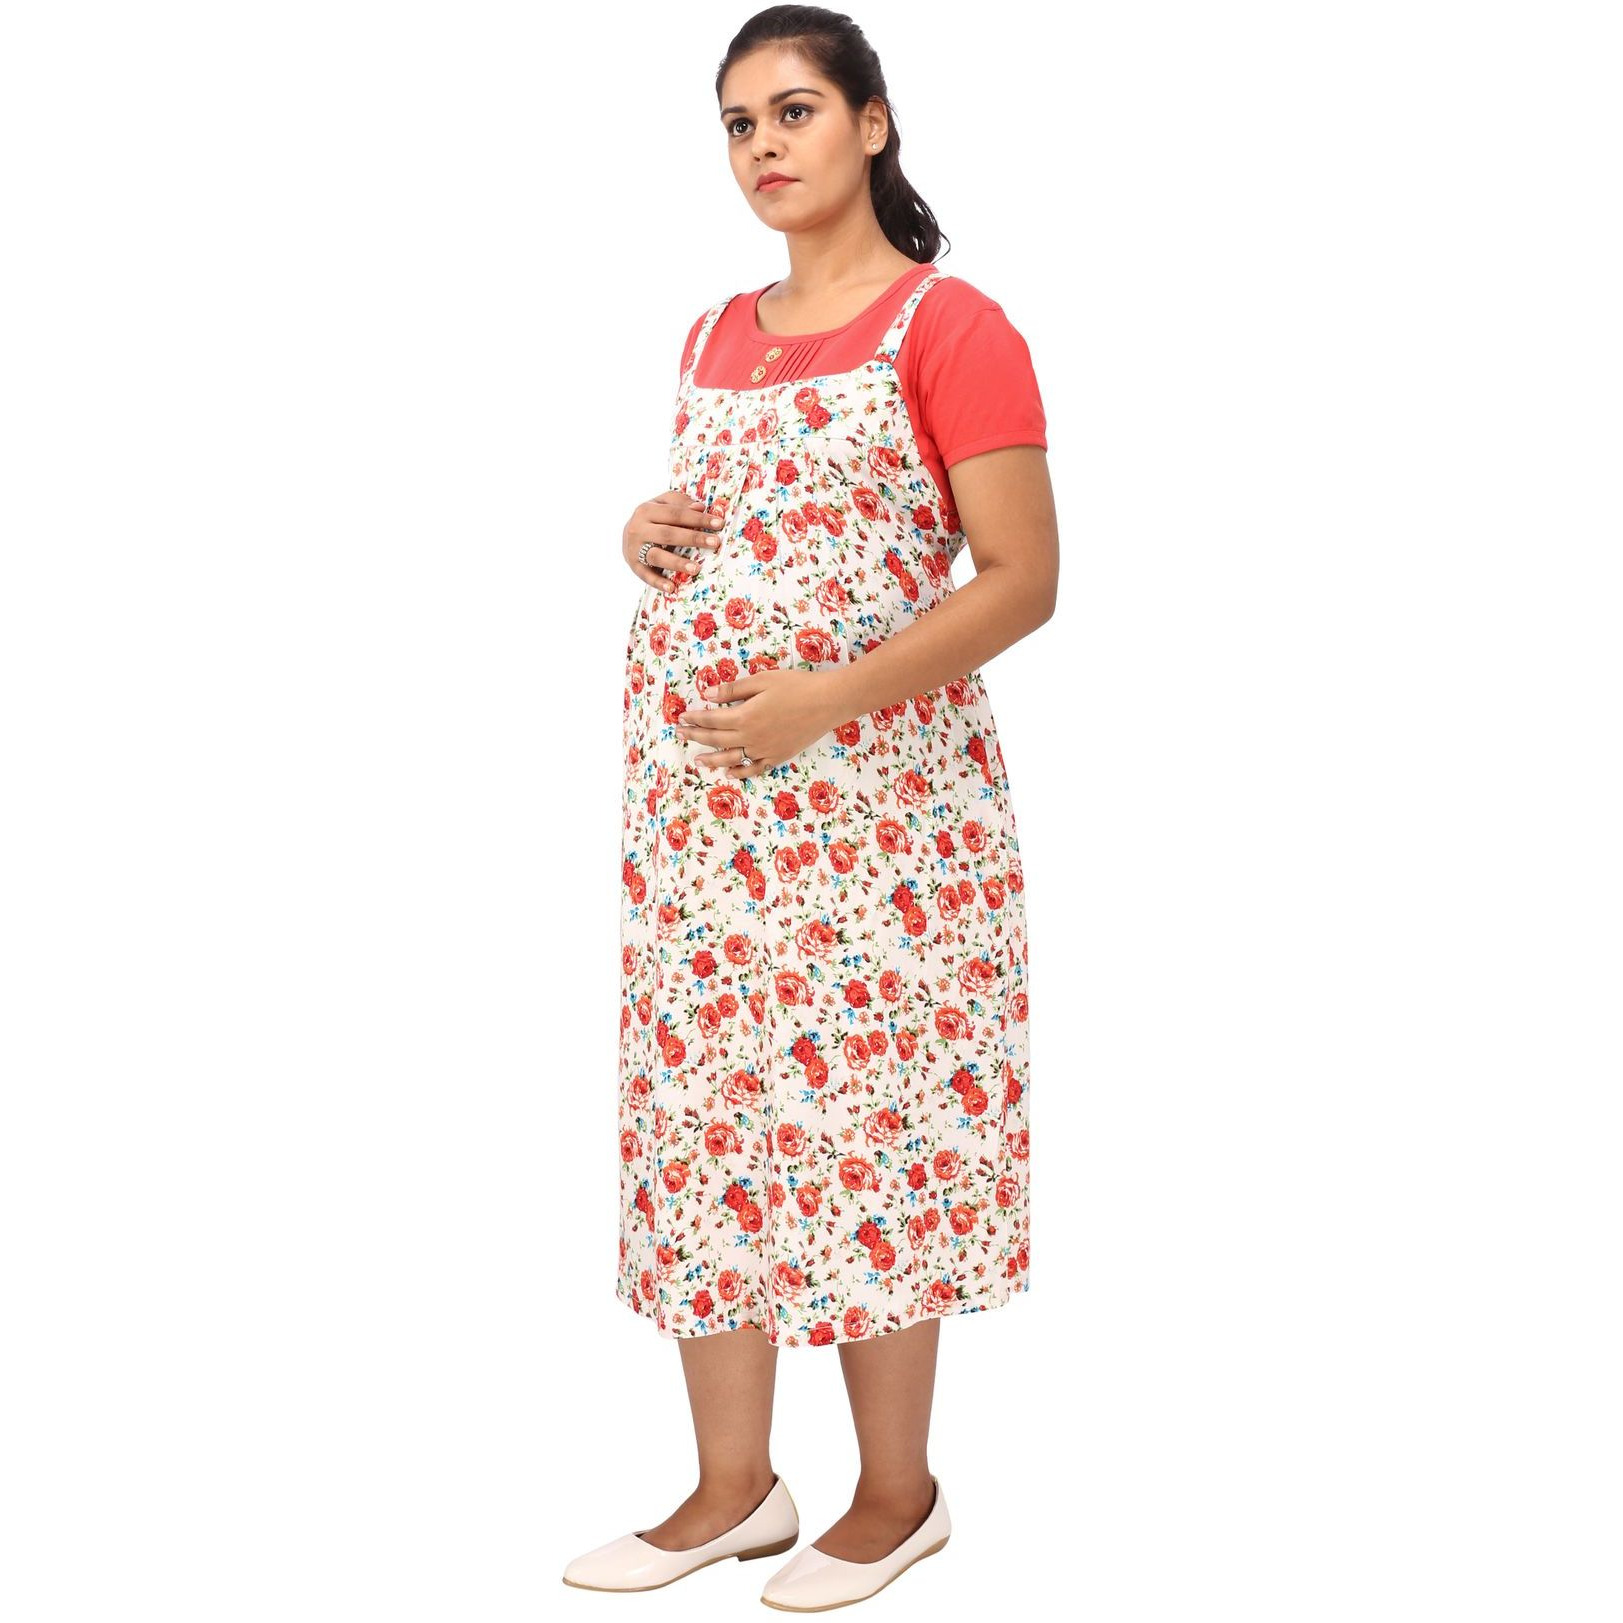 Mamma's Maternity Women's Printed Peach and White Maternity Dress